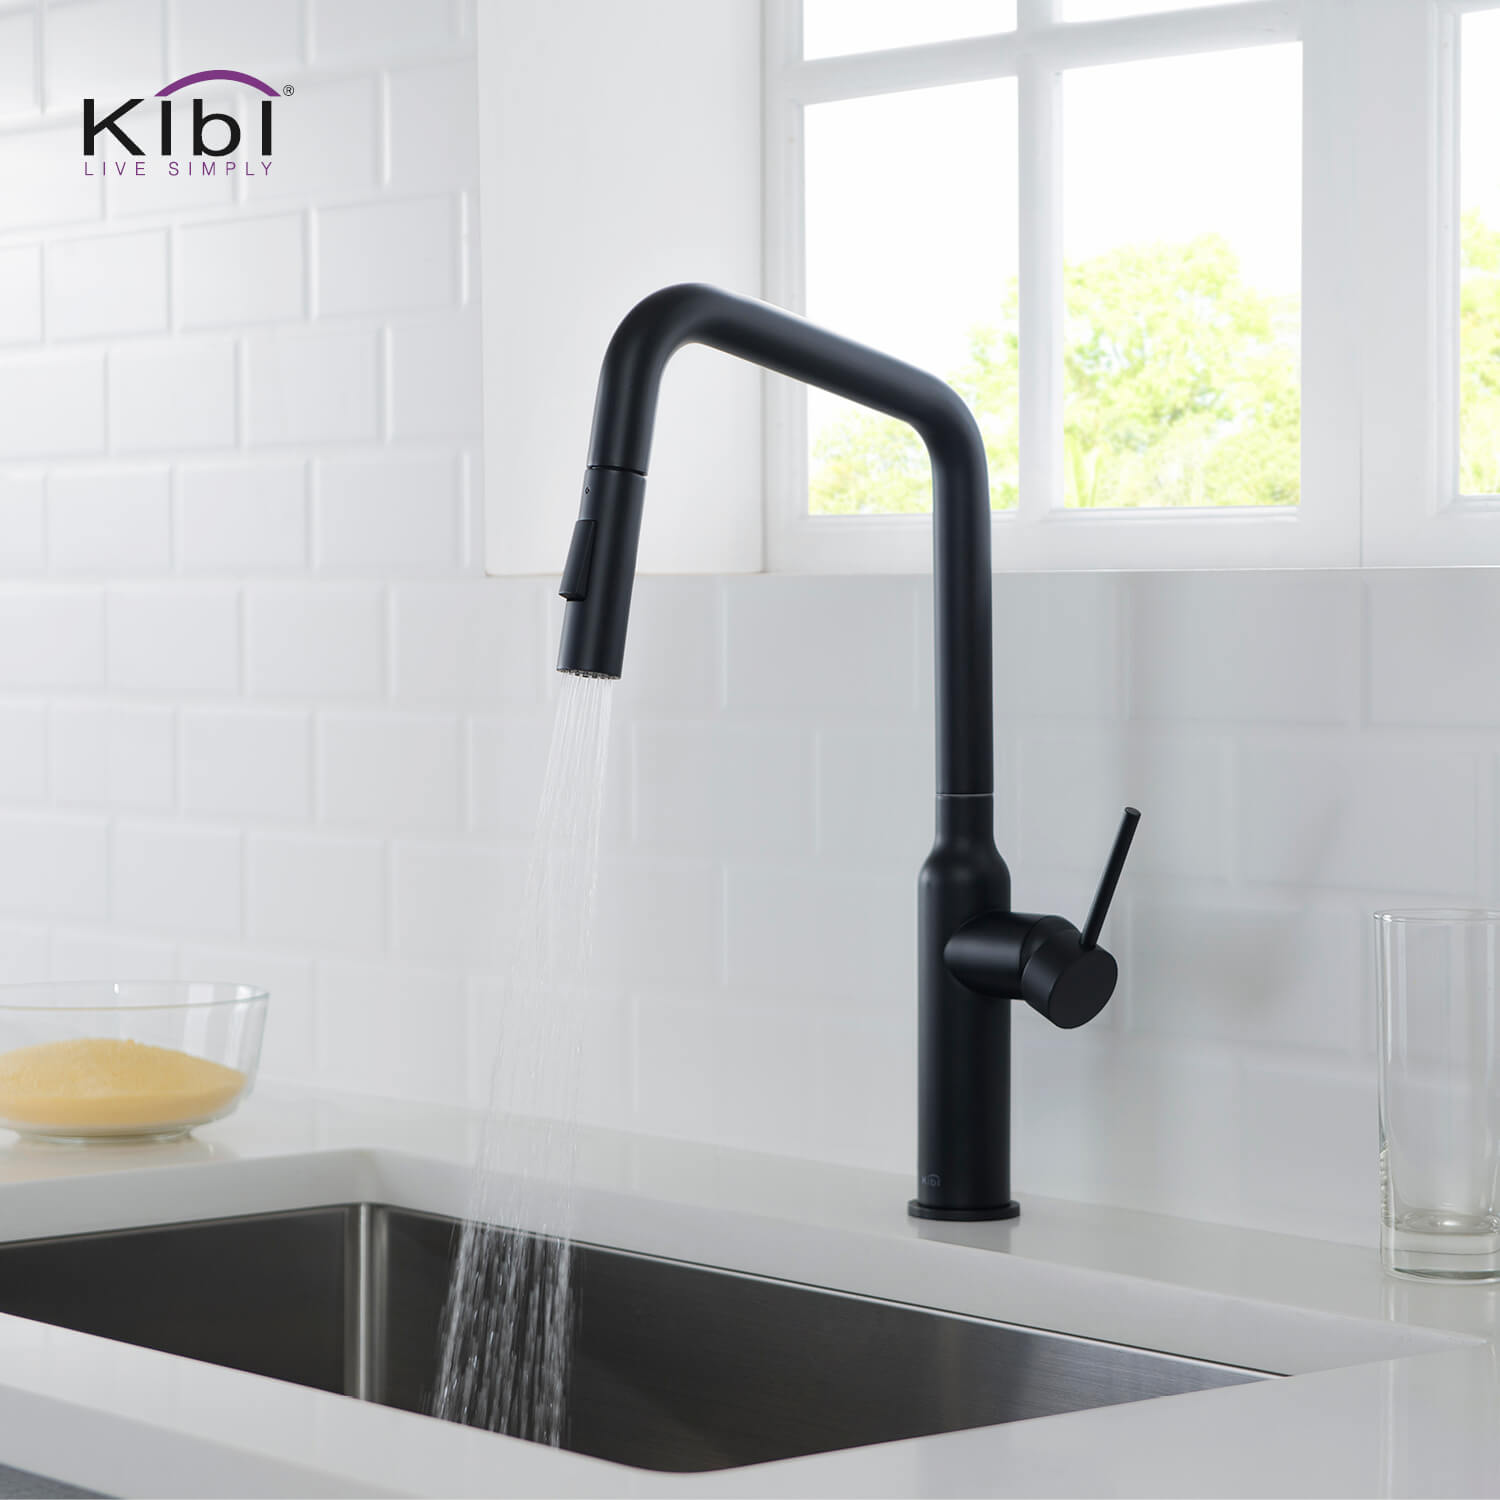 Kibi Macon Single Handle High Arc Pull Down Kitchen Faucet in Matte Black Finish